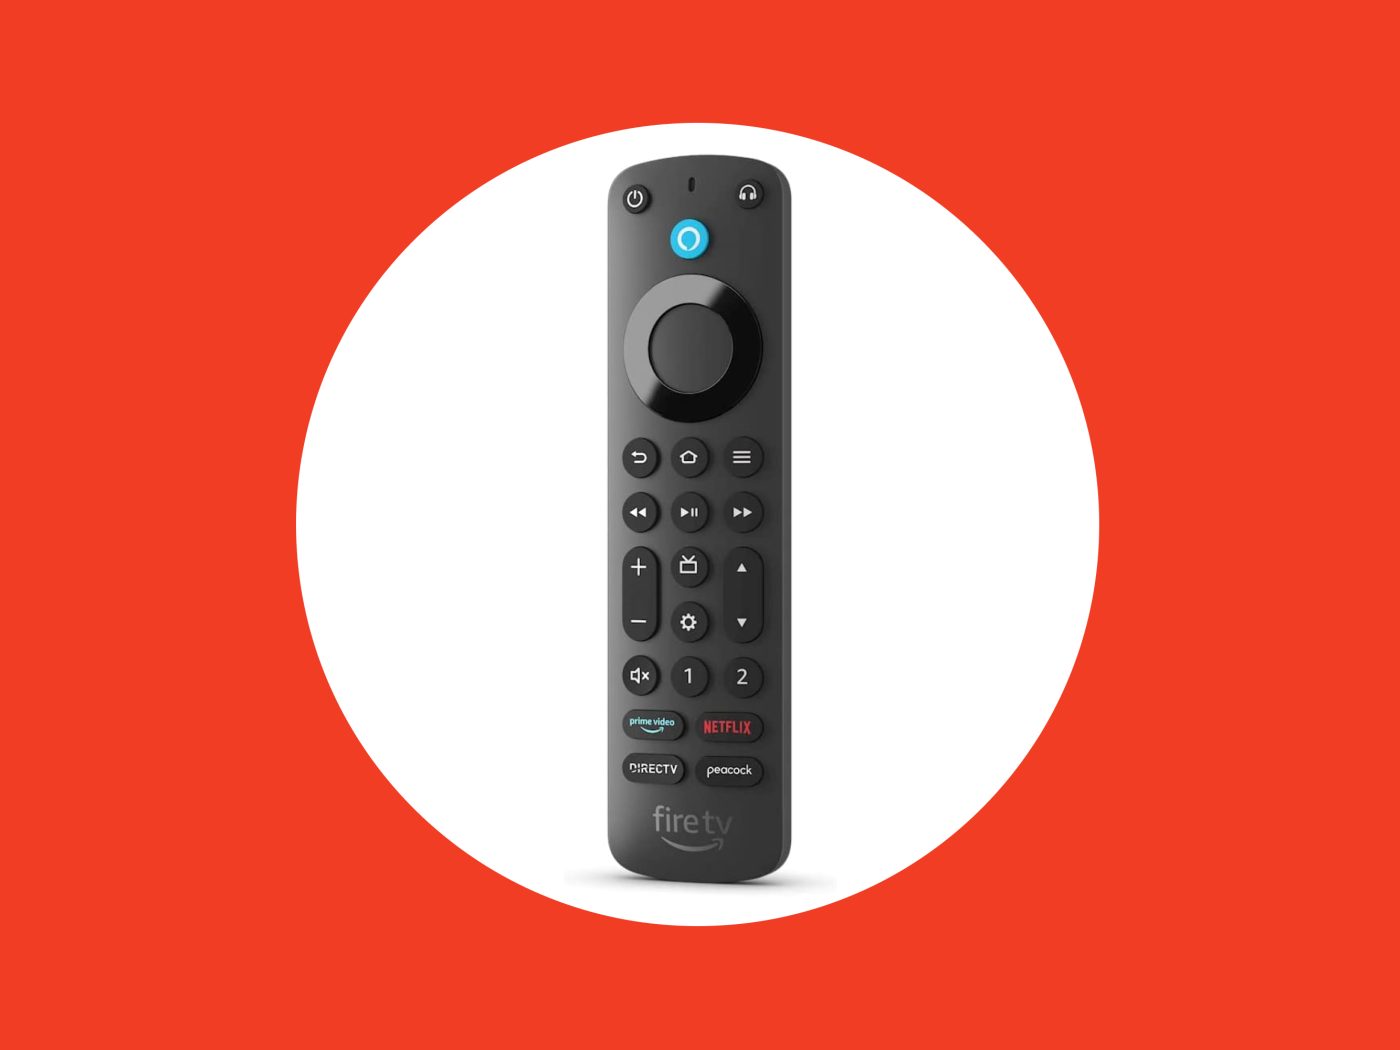 FirestickFire TV Stick with Alexa Voice Remote - TVs, Video